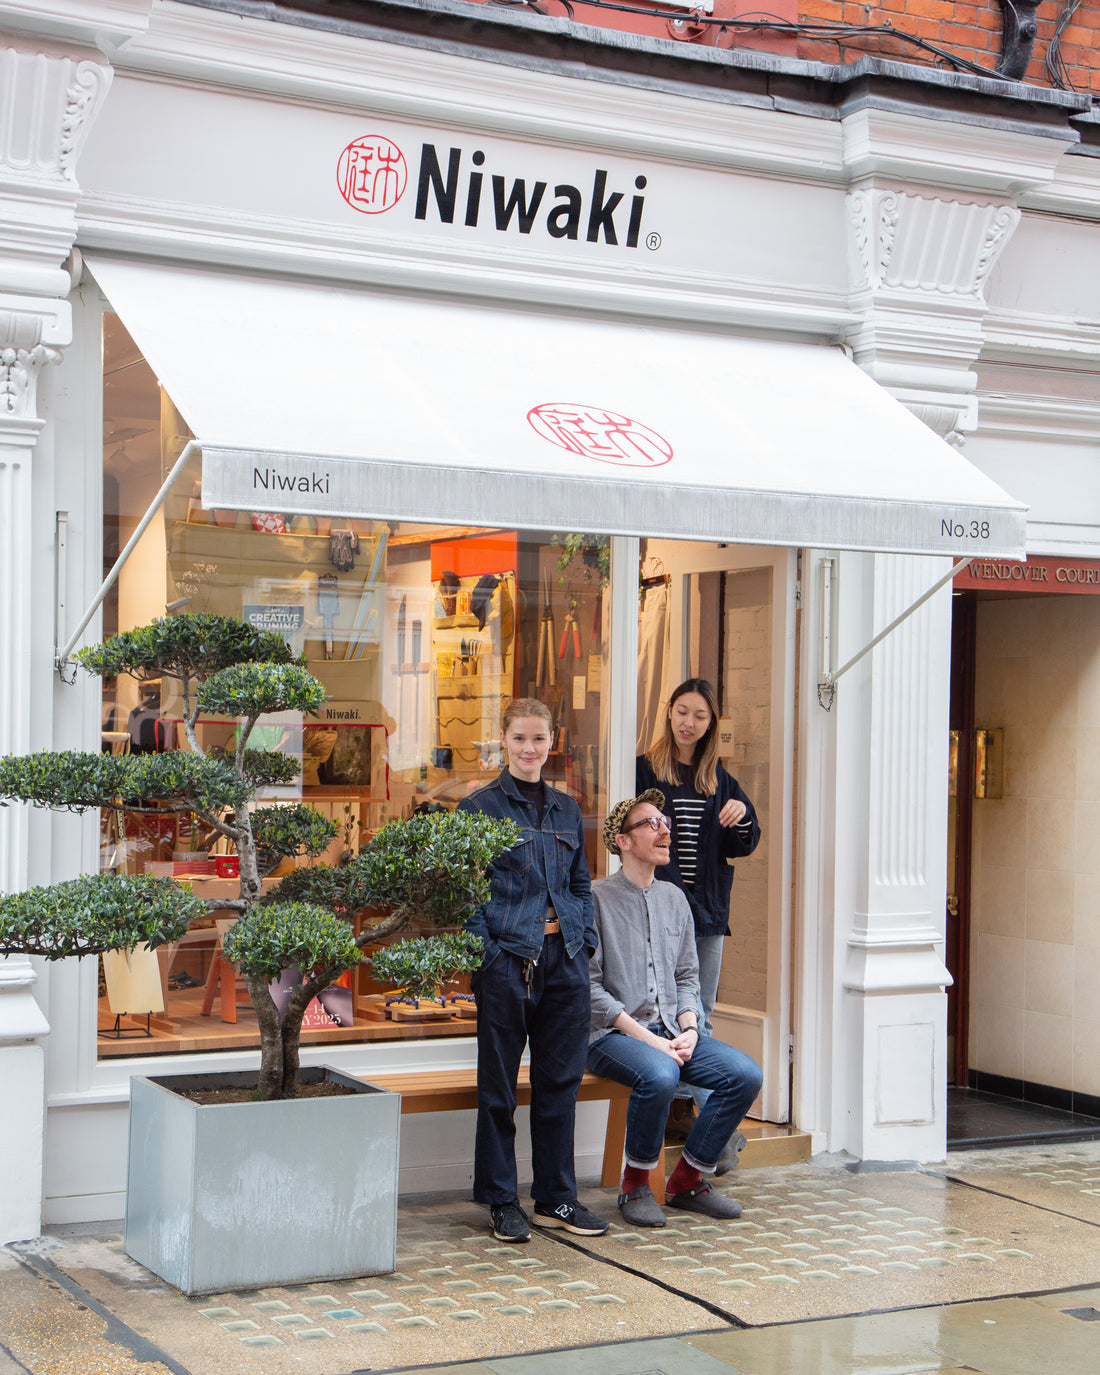 Nakata Hangers for Niwaki Chiltern St